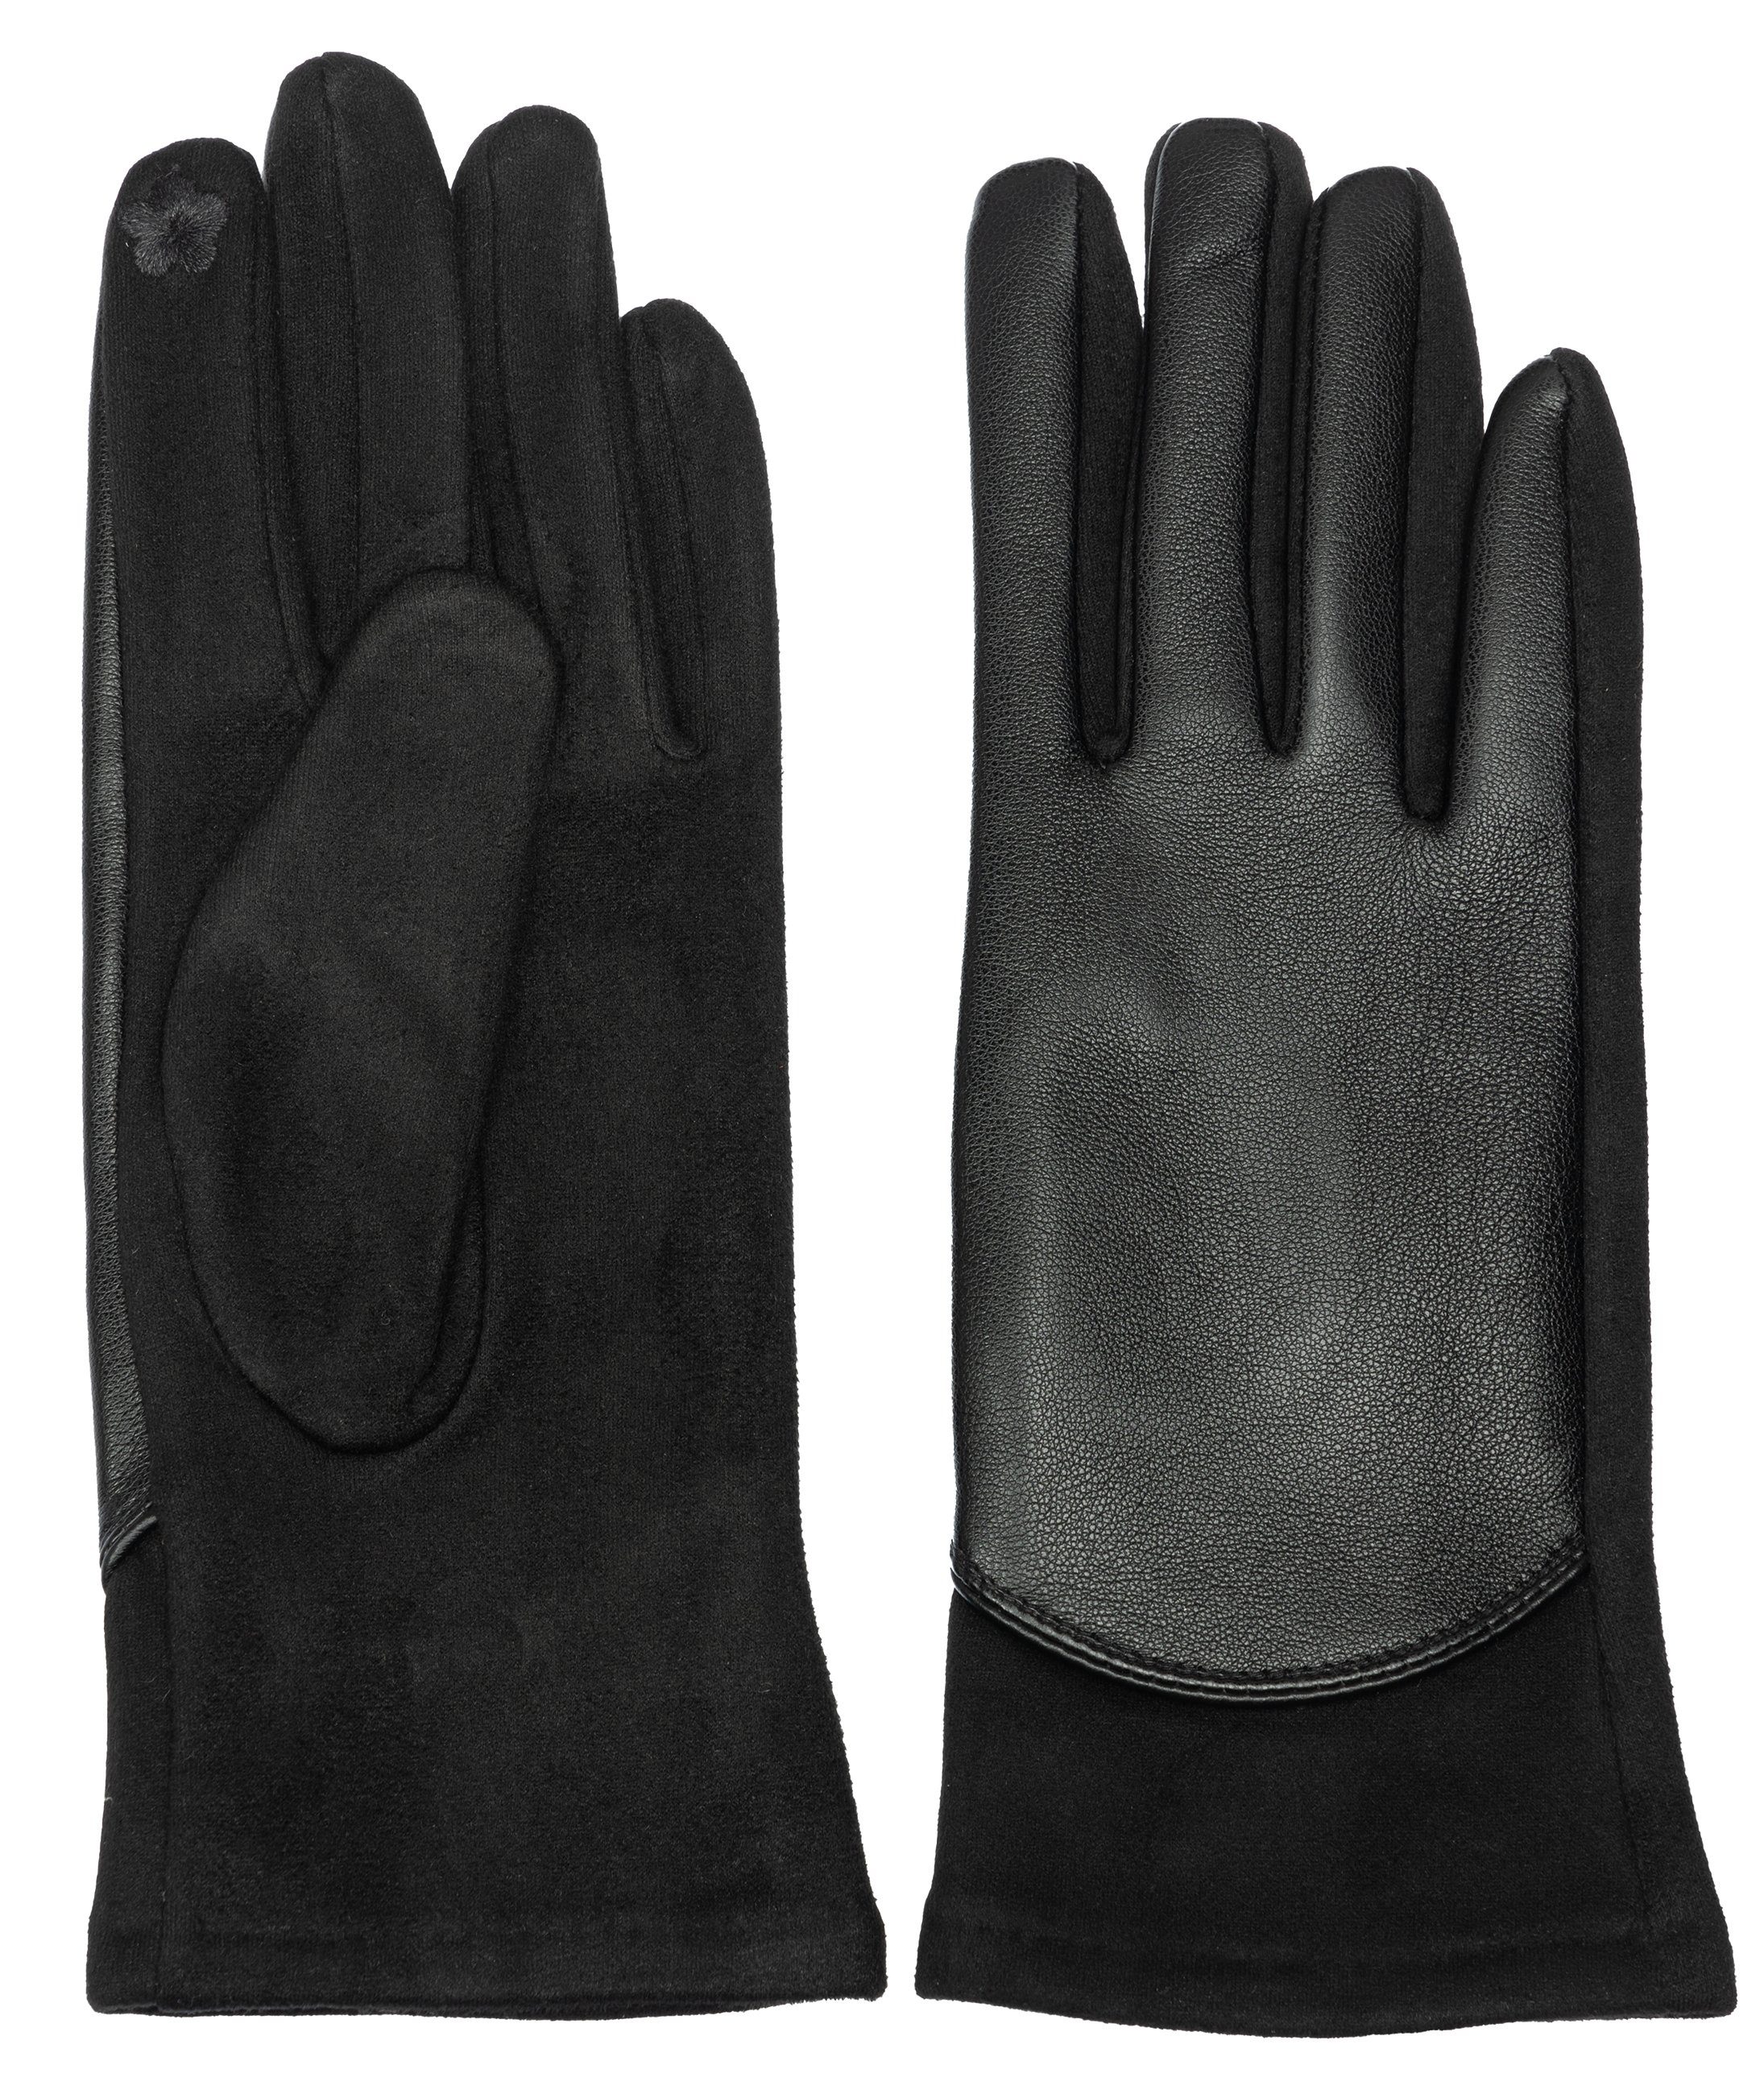 Caspar Strickhandschuhe GLV016 uni klassisch Handschuhe Damen elegante schwarz